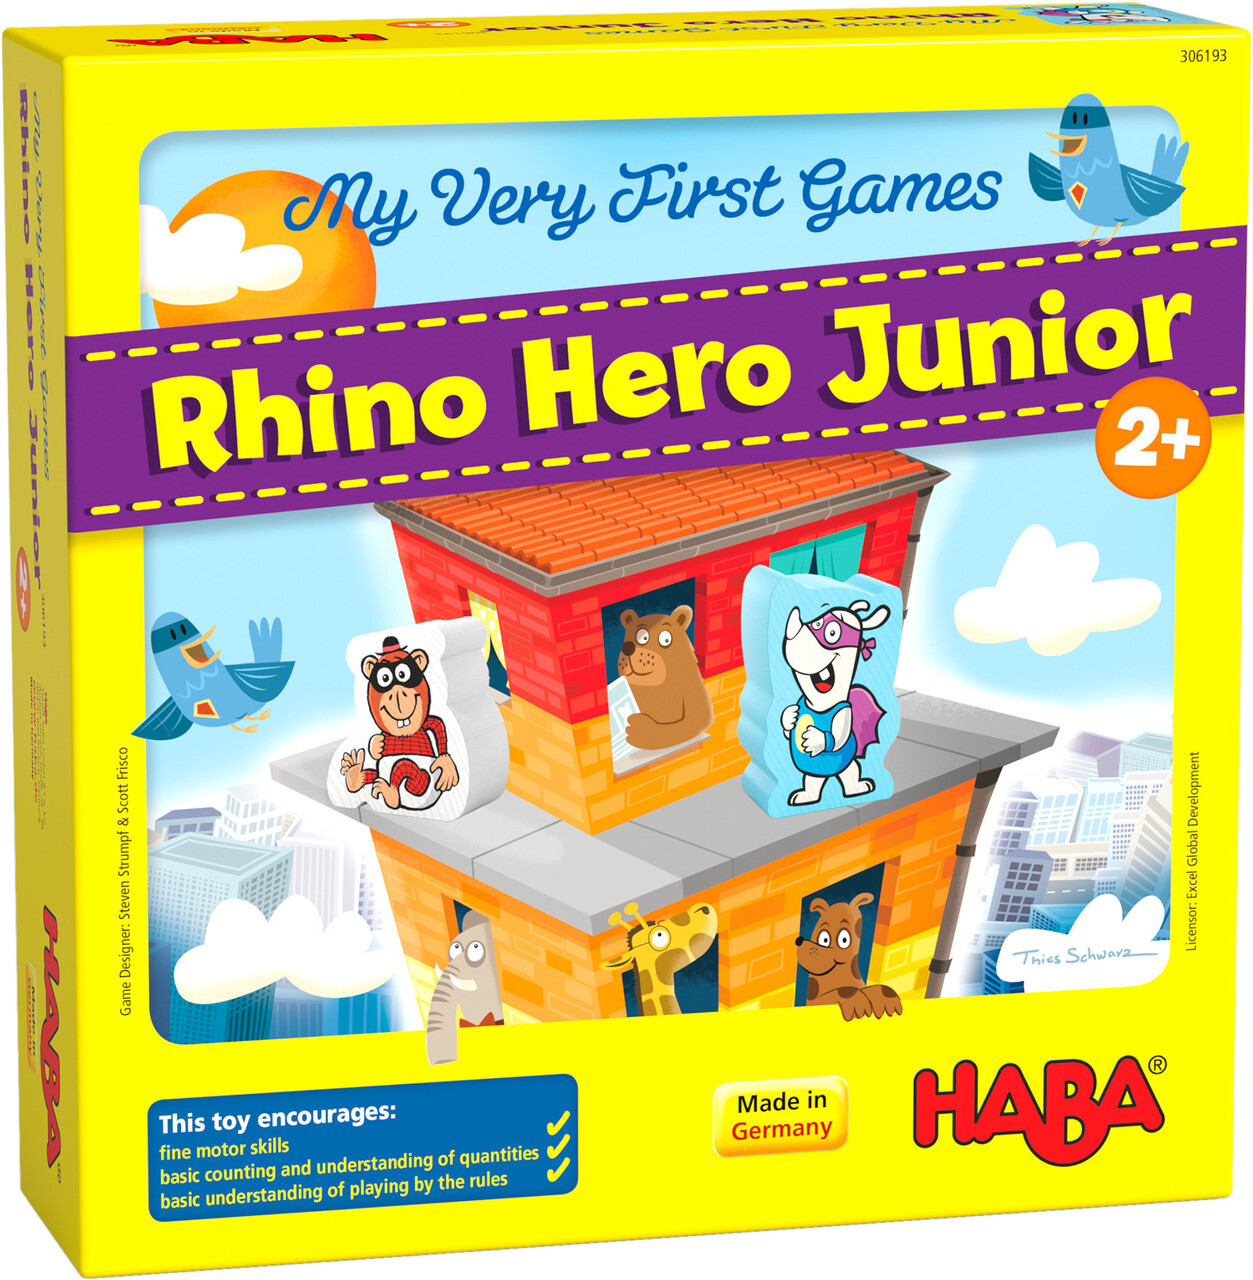 Rhino Hero Jr